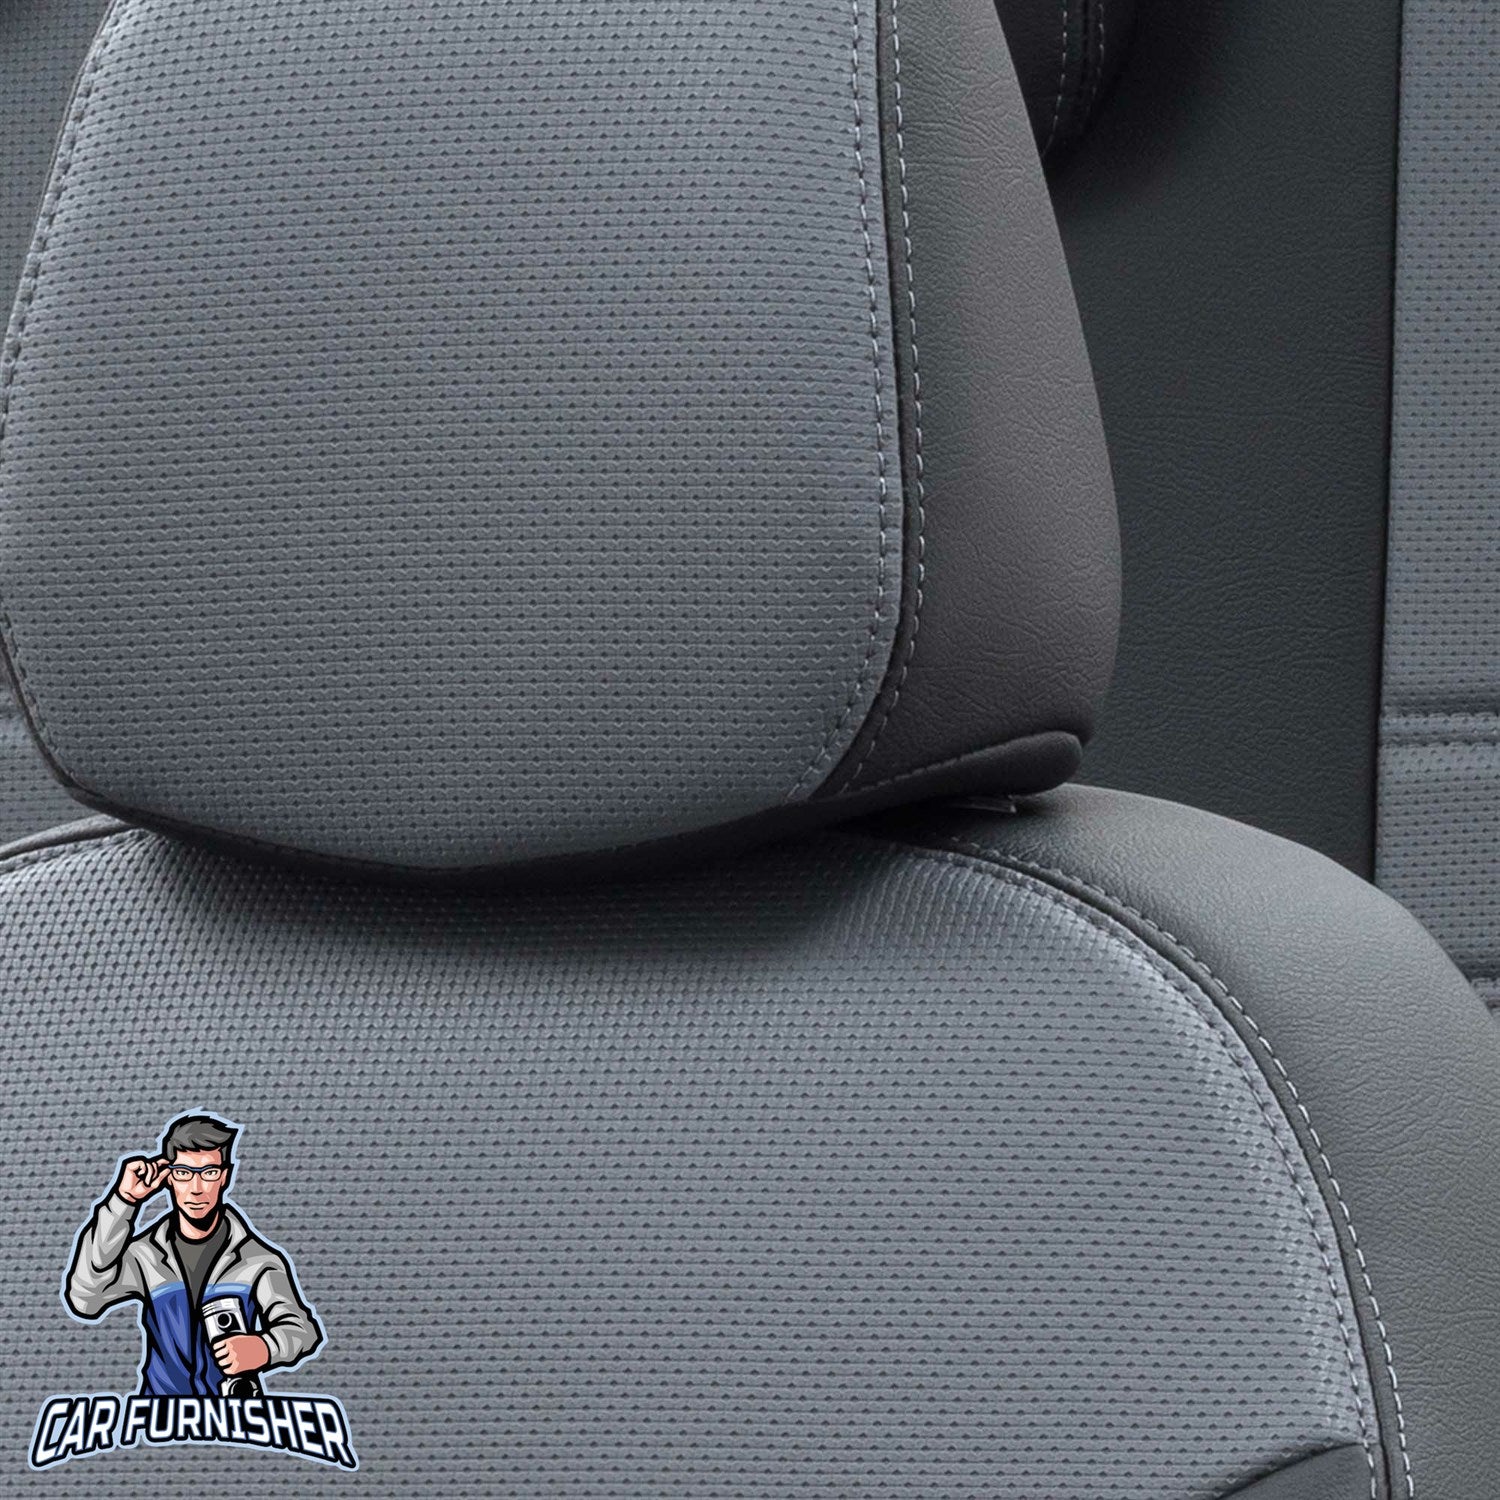 Tata Xenon Seat Covers New York Leather Design Smoked Black Leather